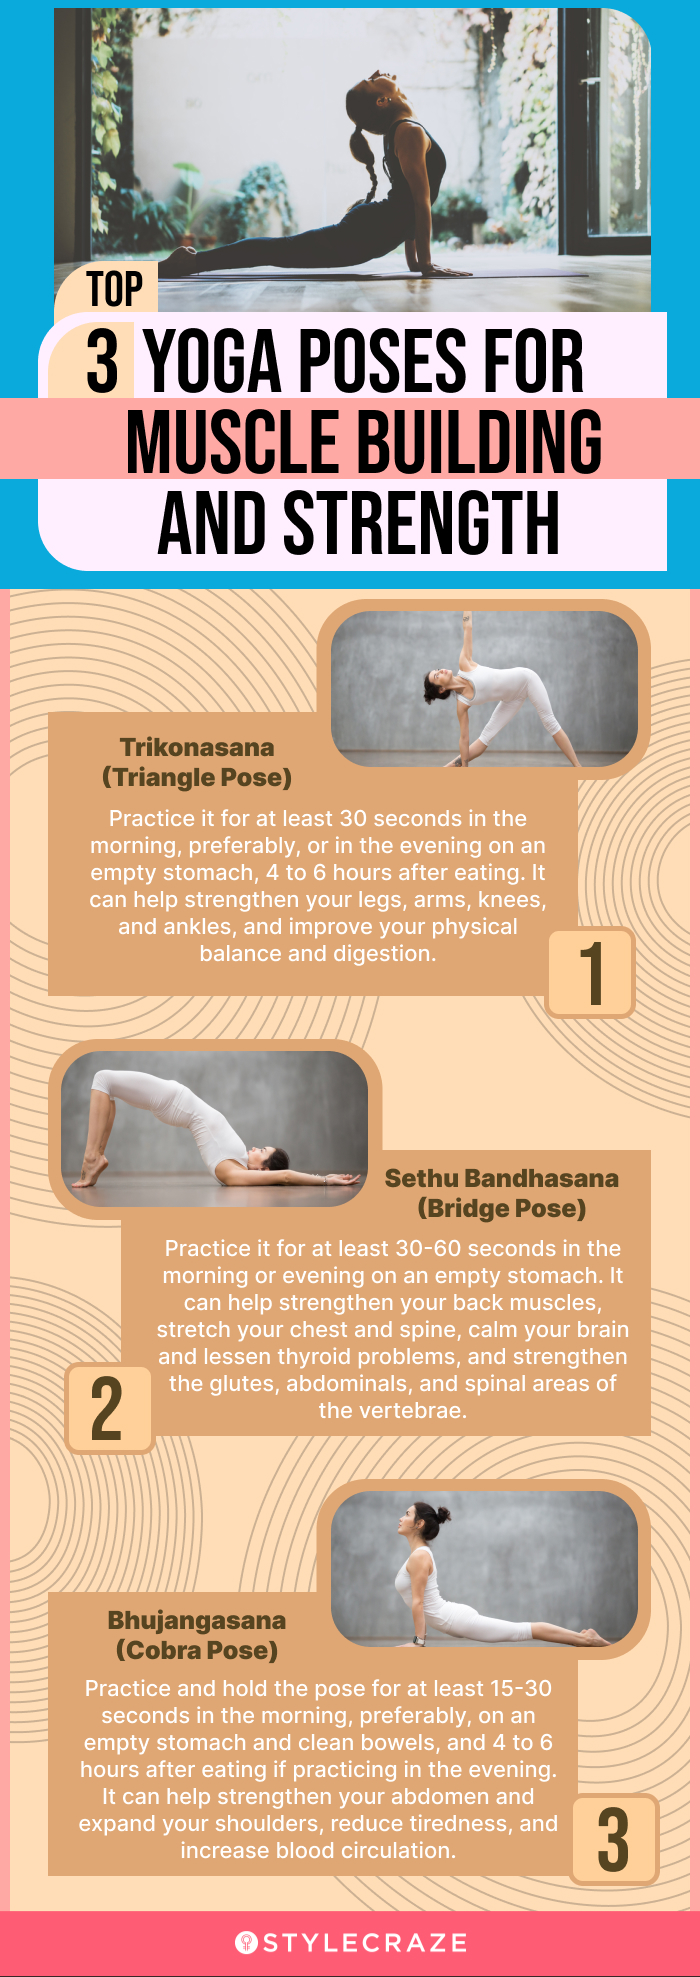 Yoga For Strength: Top 12 Yoga Poses for Strength Training - Yoga Rove